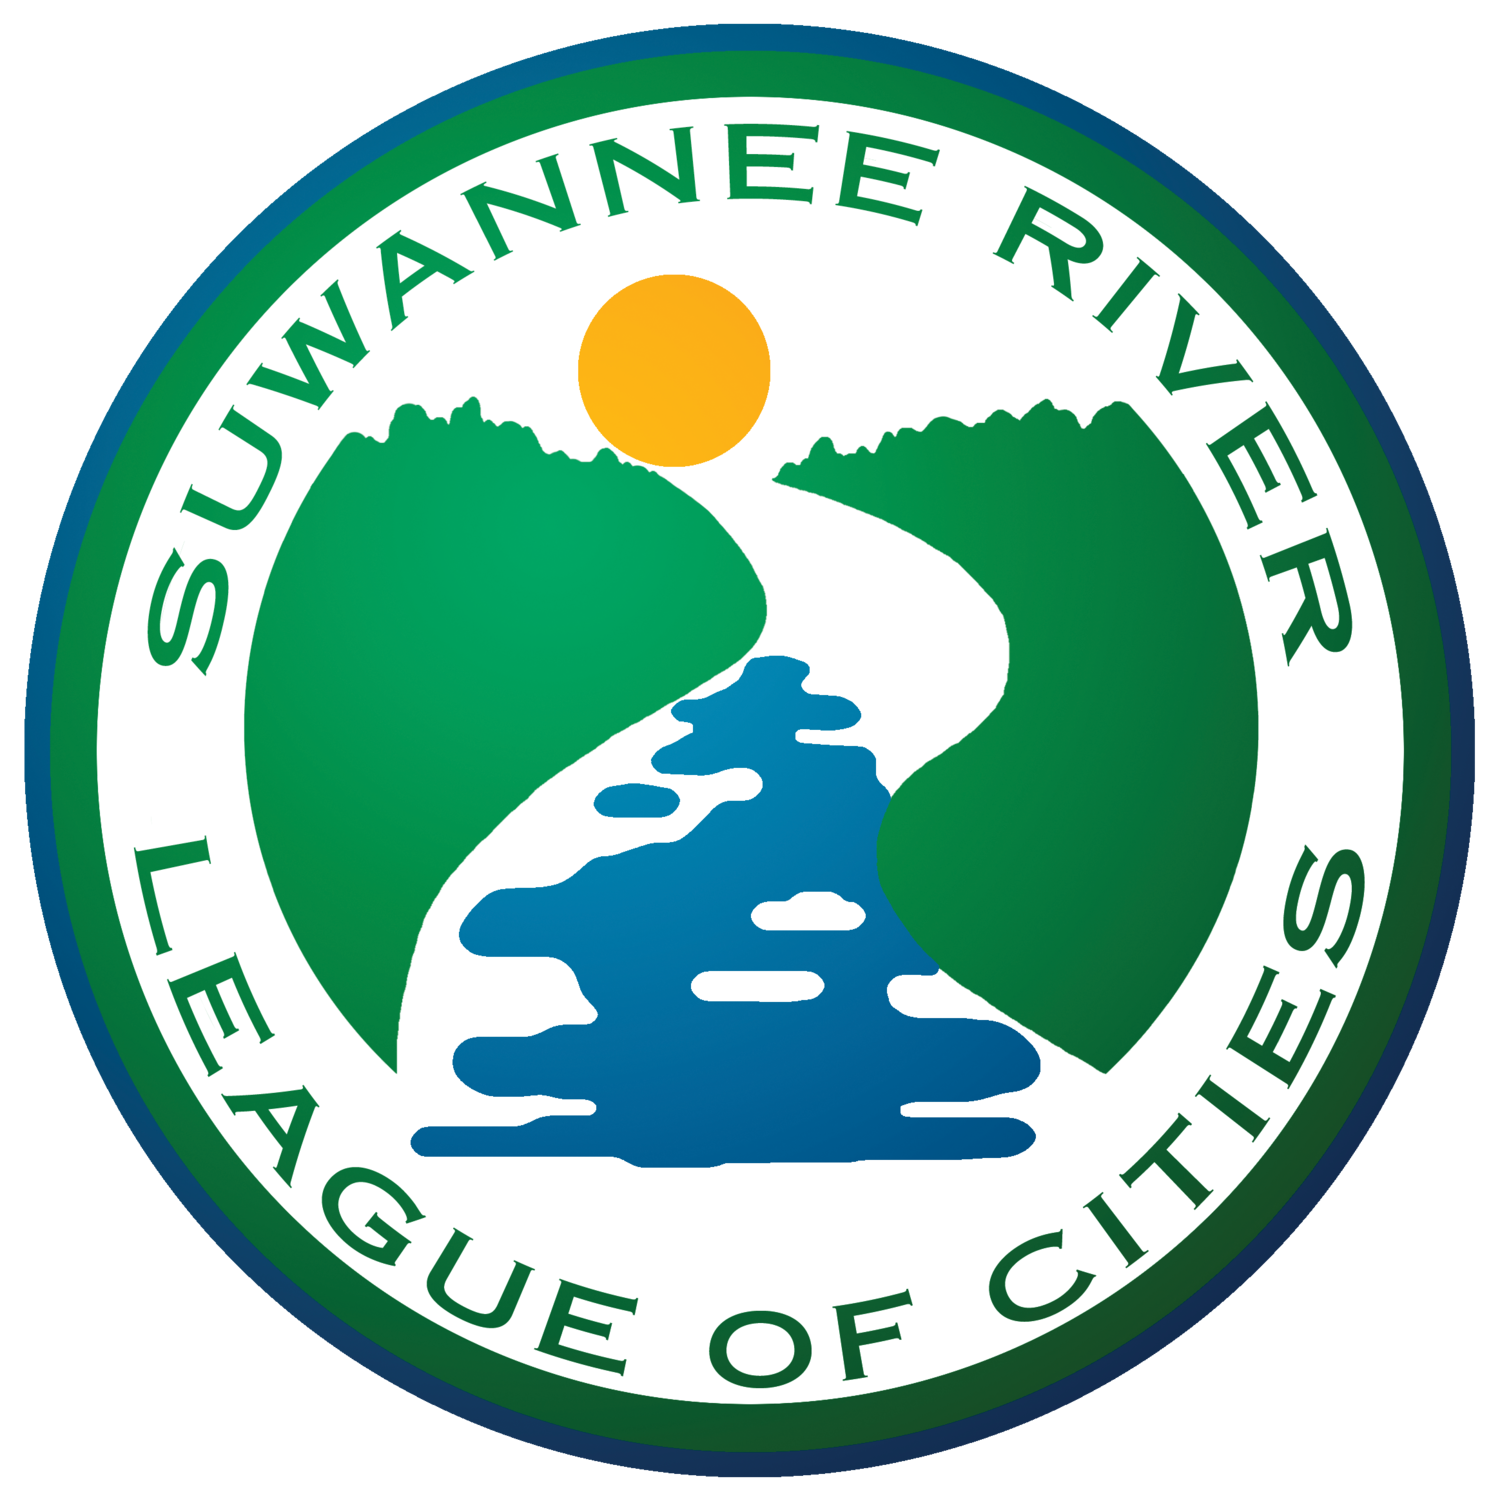 Suwannee River League of Cities